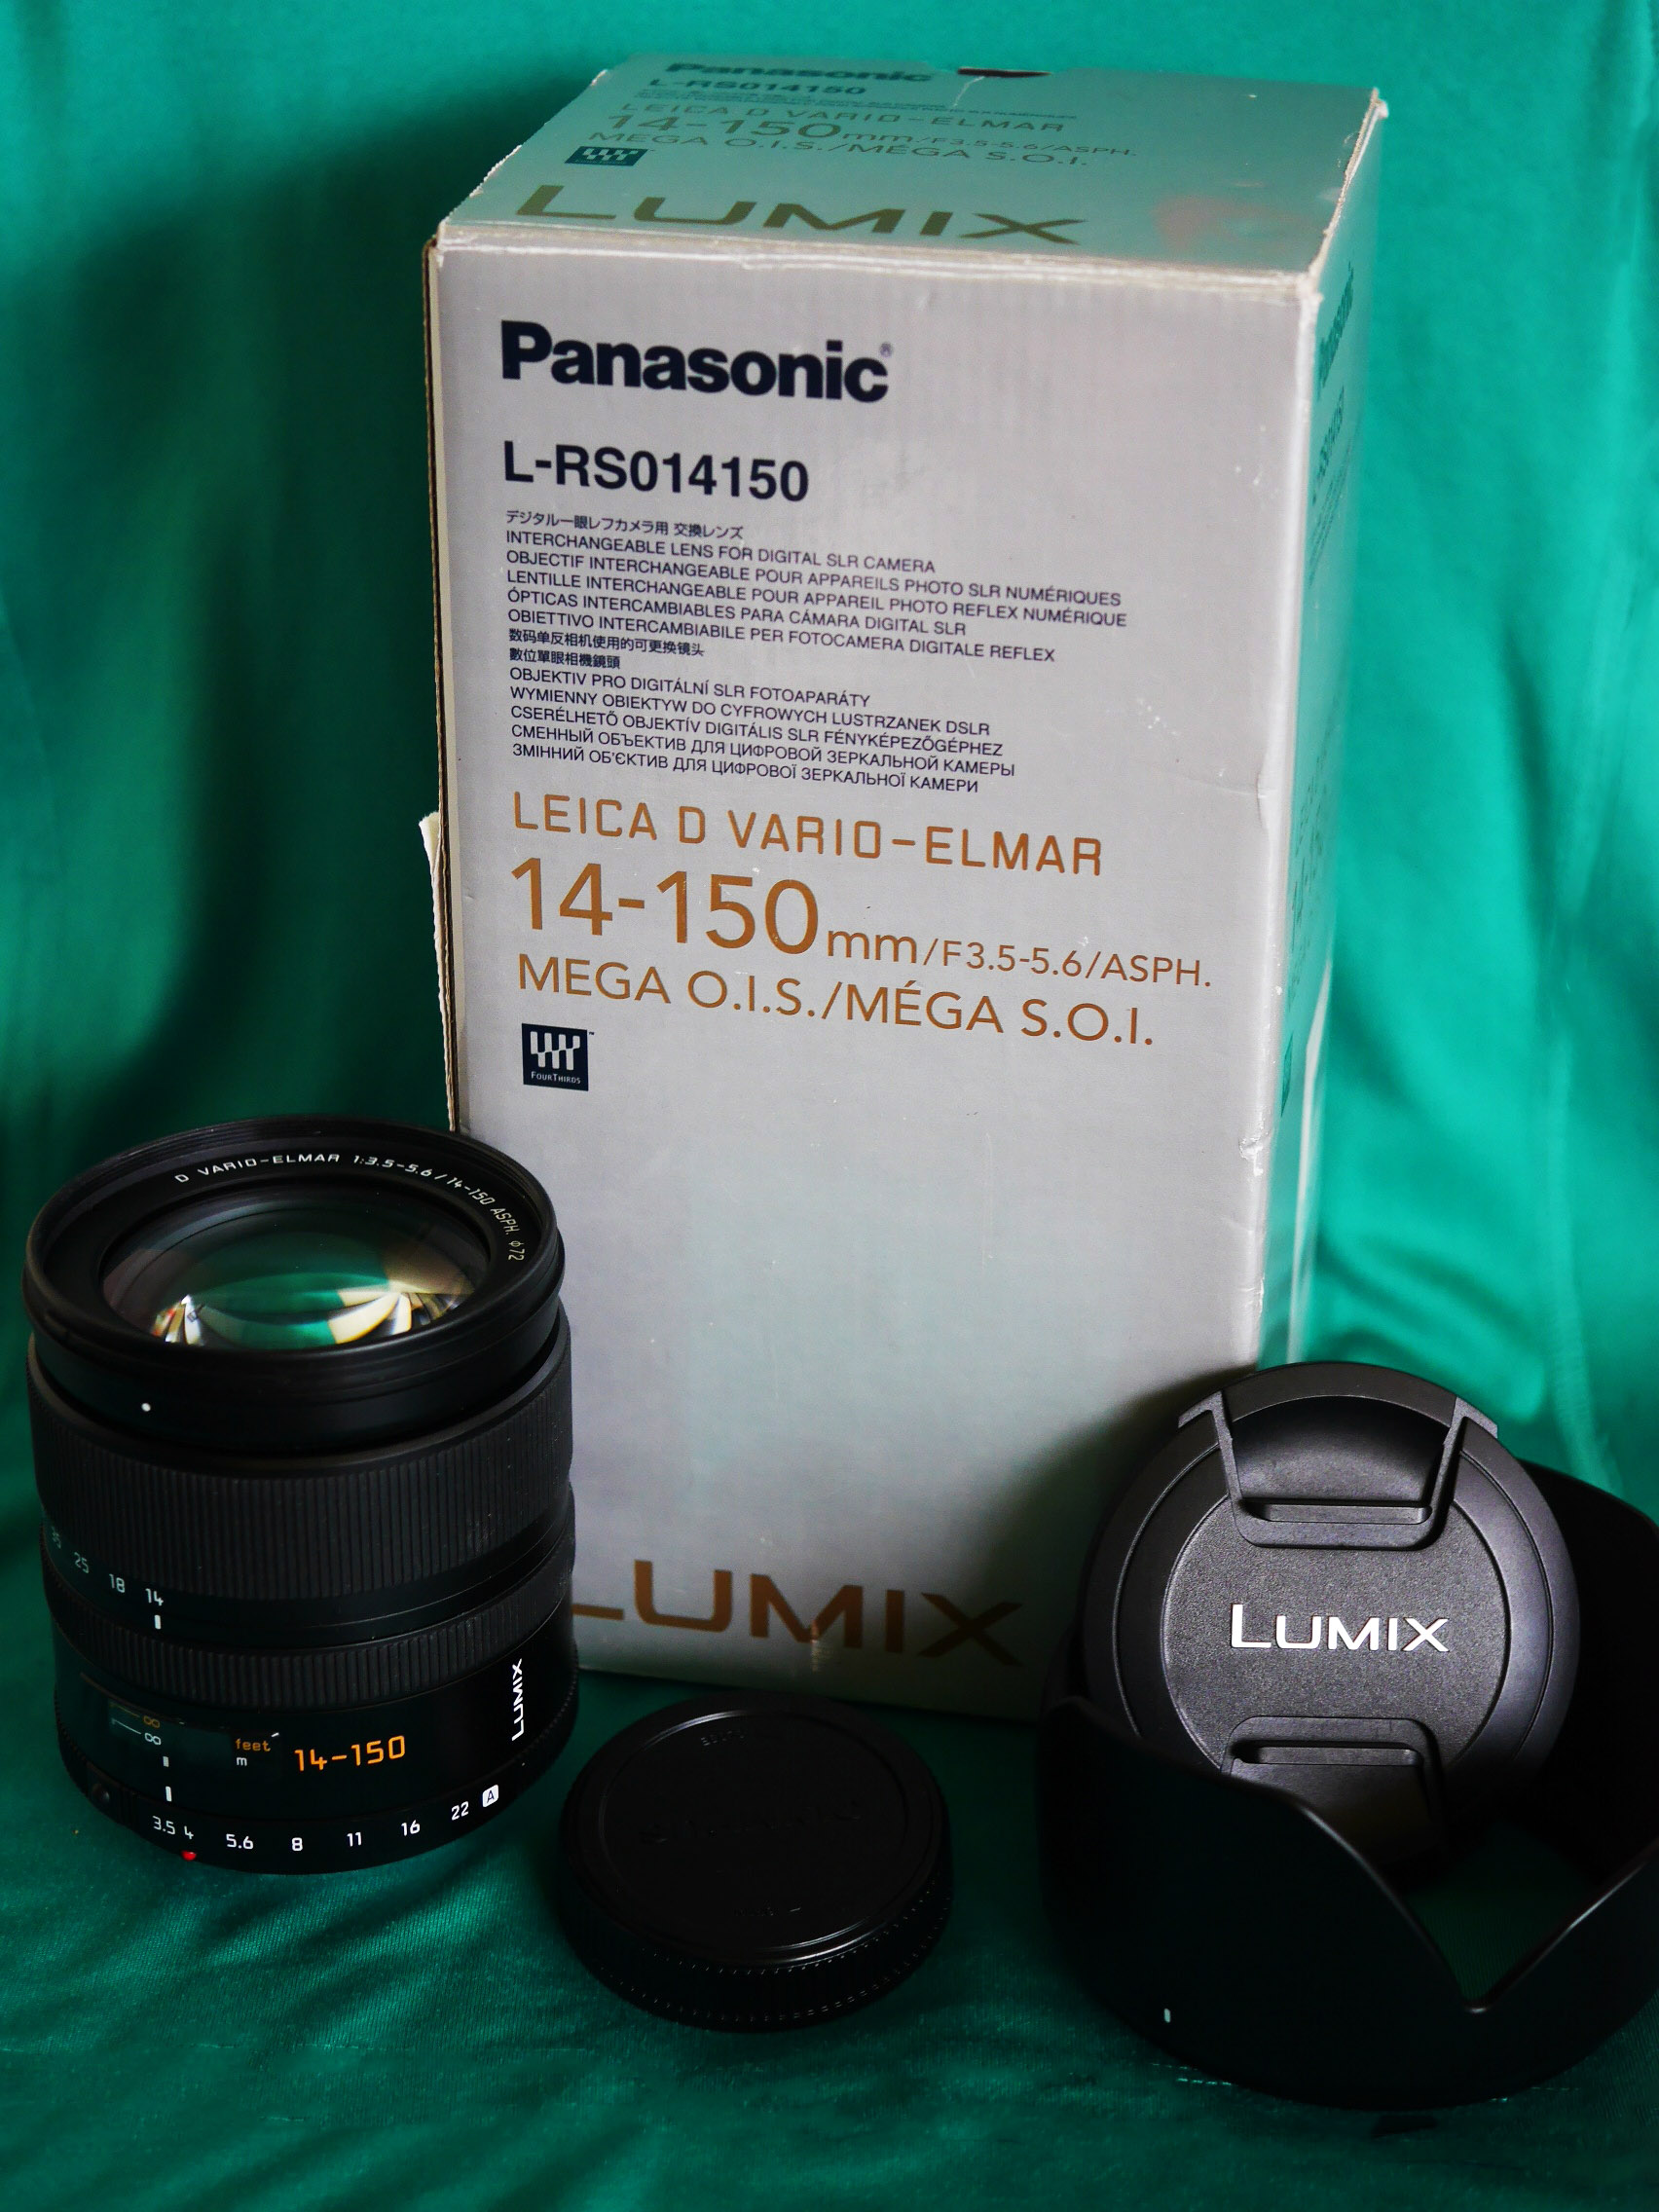 Leica D Vario-Elmar Panasonic 14-150mm F/3.5-5.6 in Box L-RS014150